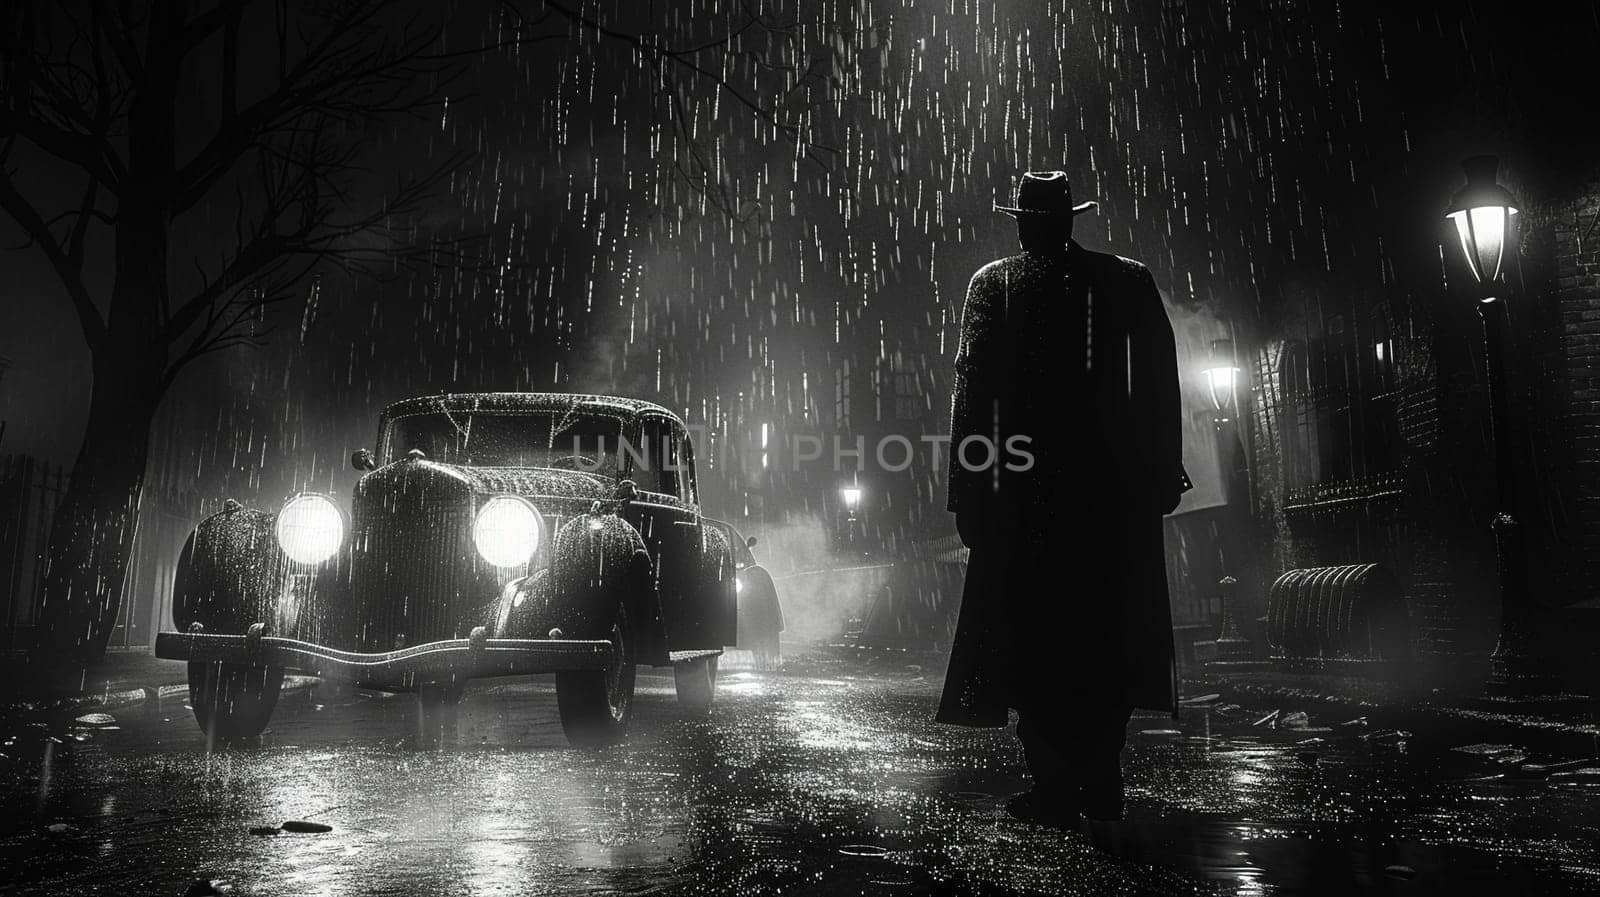 Monochrome Pixelation of a Mysterious Noir Scene, A vintage detective scene blurs into stark black and white pixels, evoking old cinema.